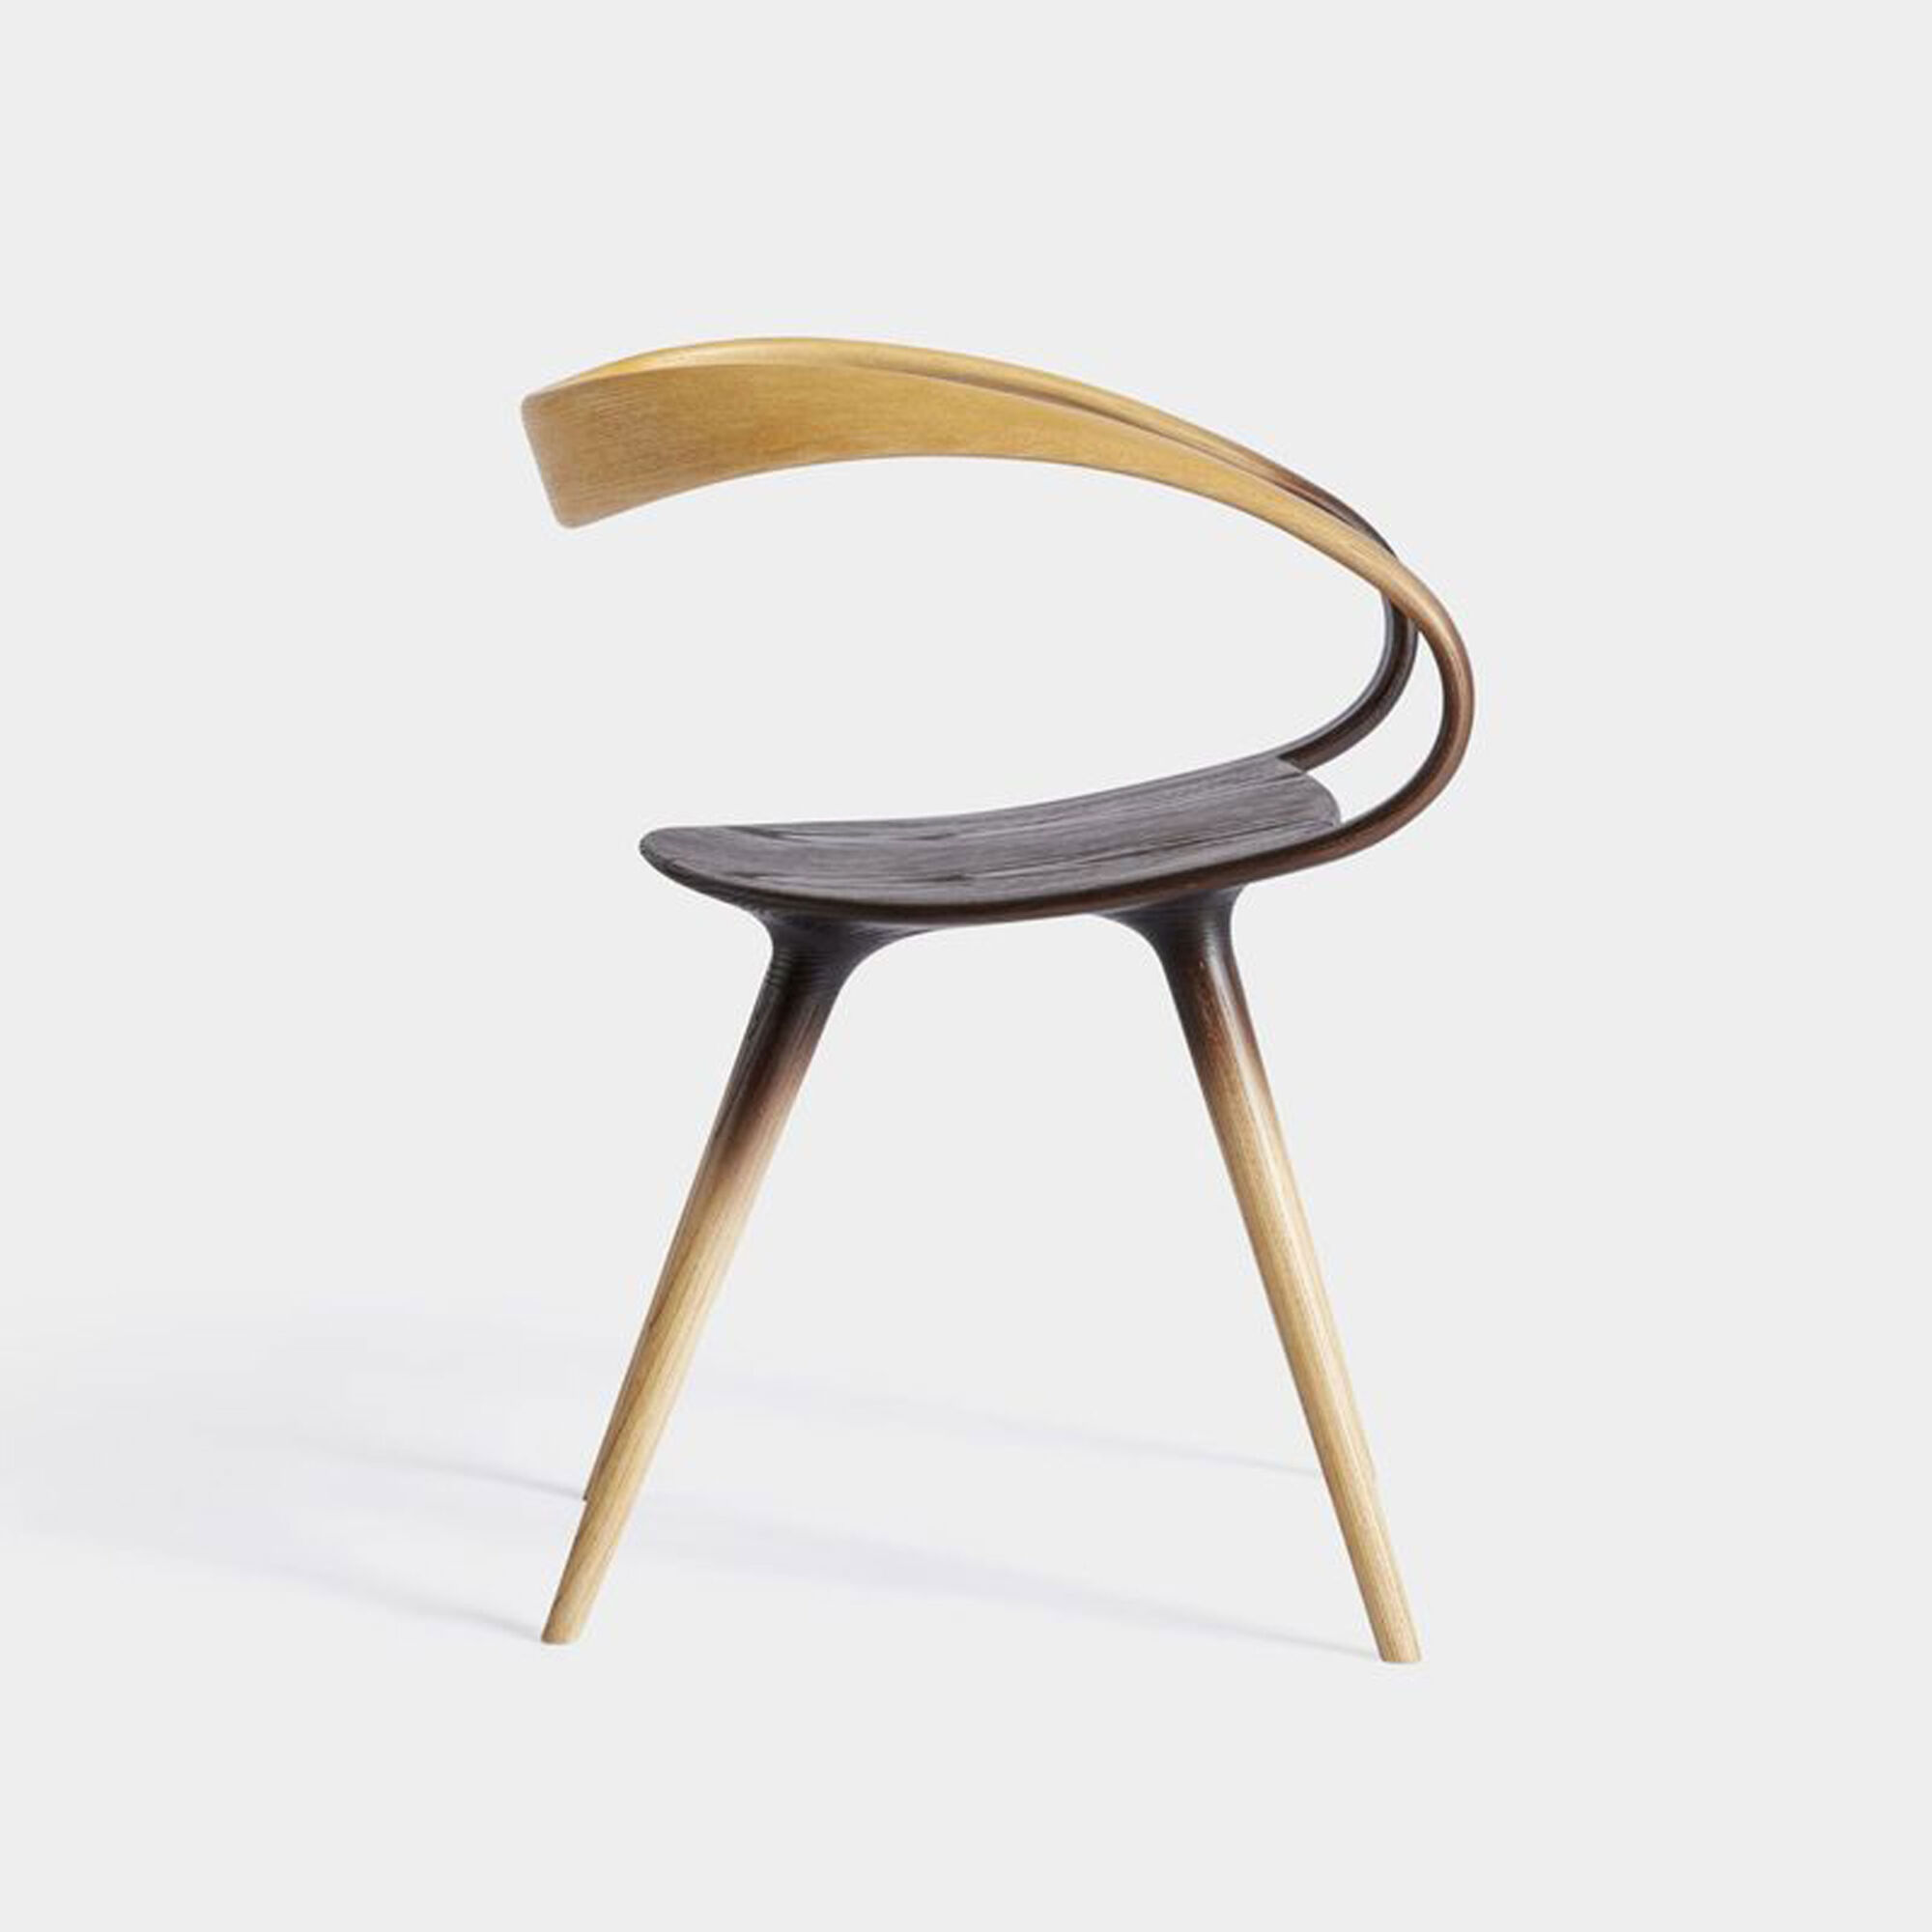 The Wick - Objects Jan Waterson, Fumed Velo DB Chair